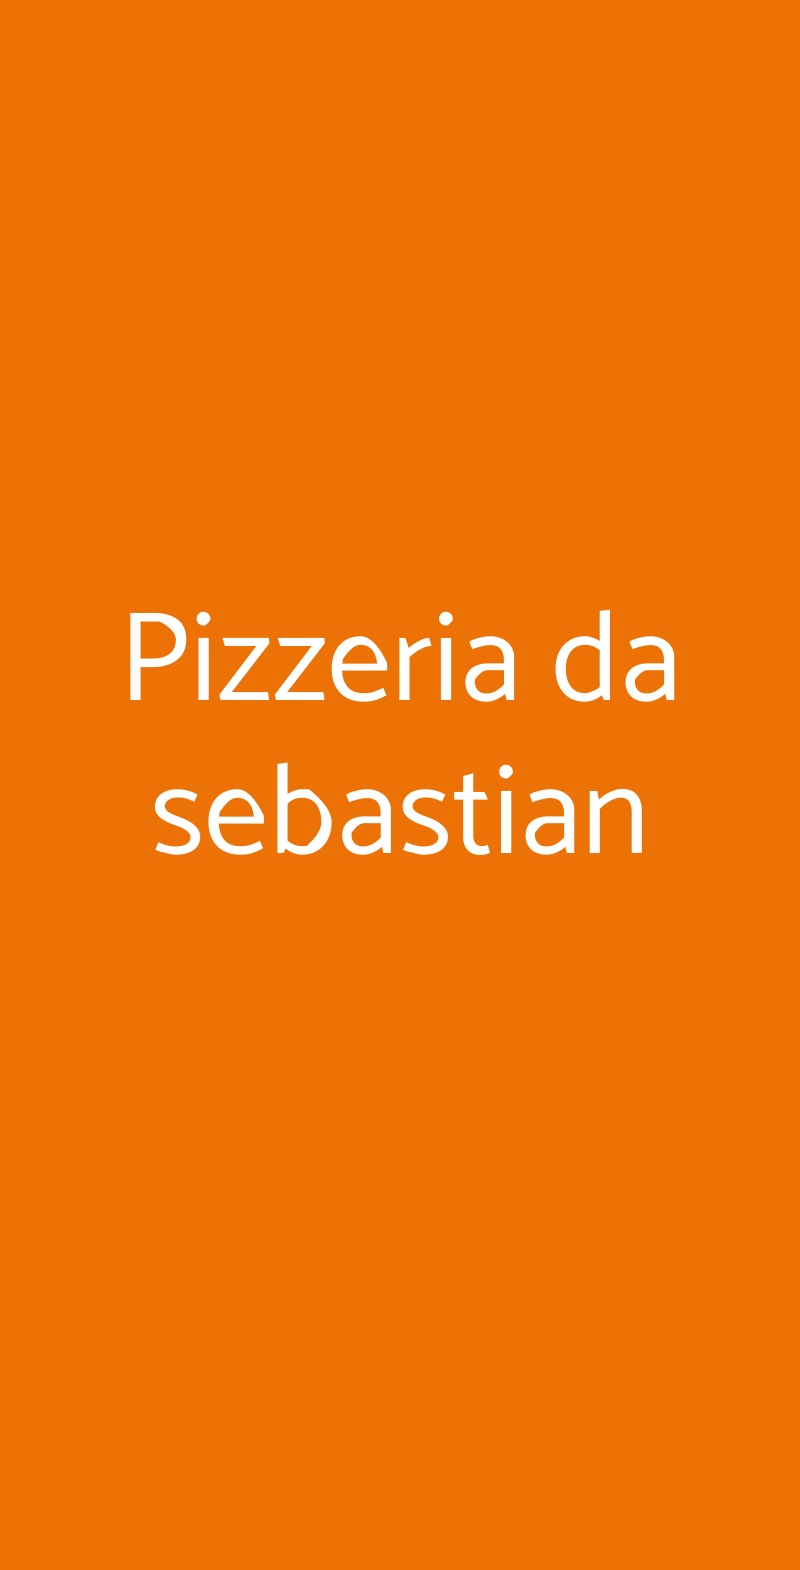 Pizzeria da sebastian Biassono menù 1 pagina